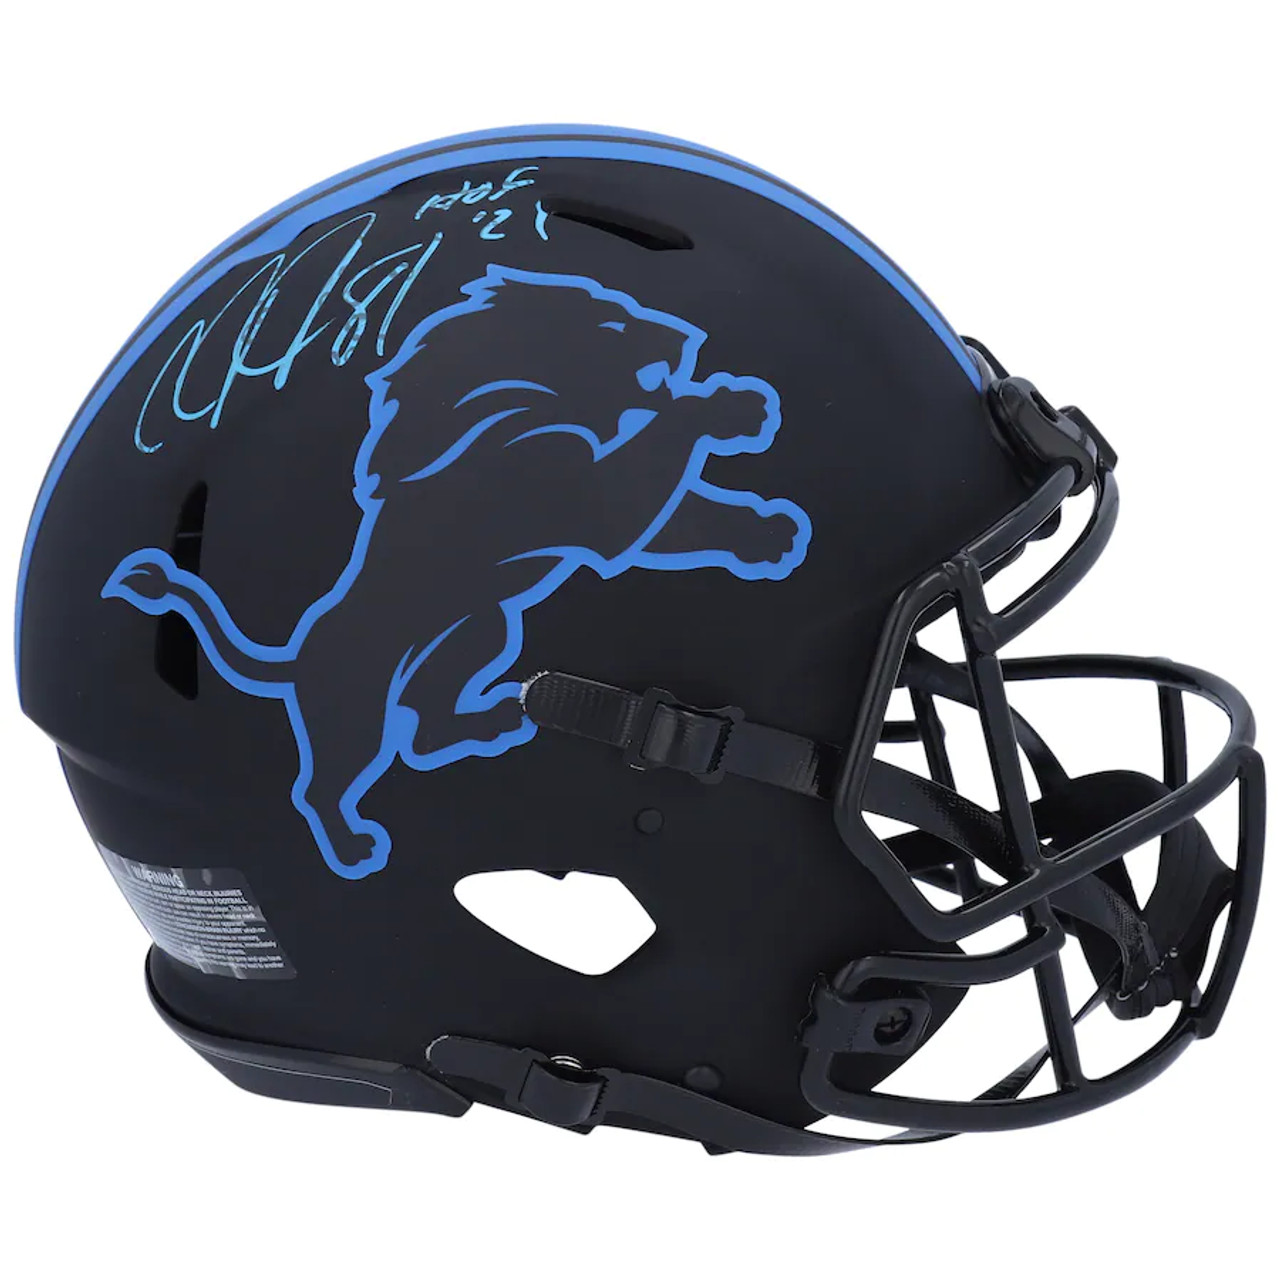 Calvin Johnson Detroit Lions Autographed Riddell Eclipse Alternate Speed Authentic Helmet with HOF 21' Inscription